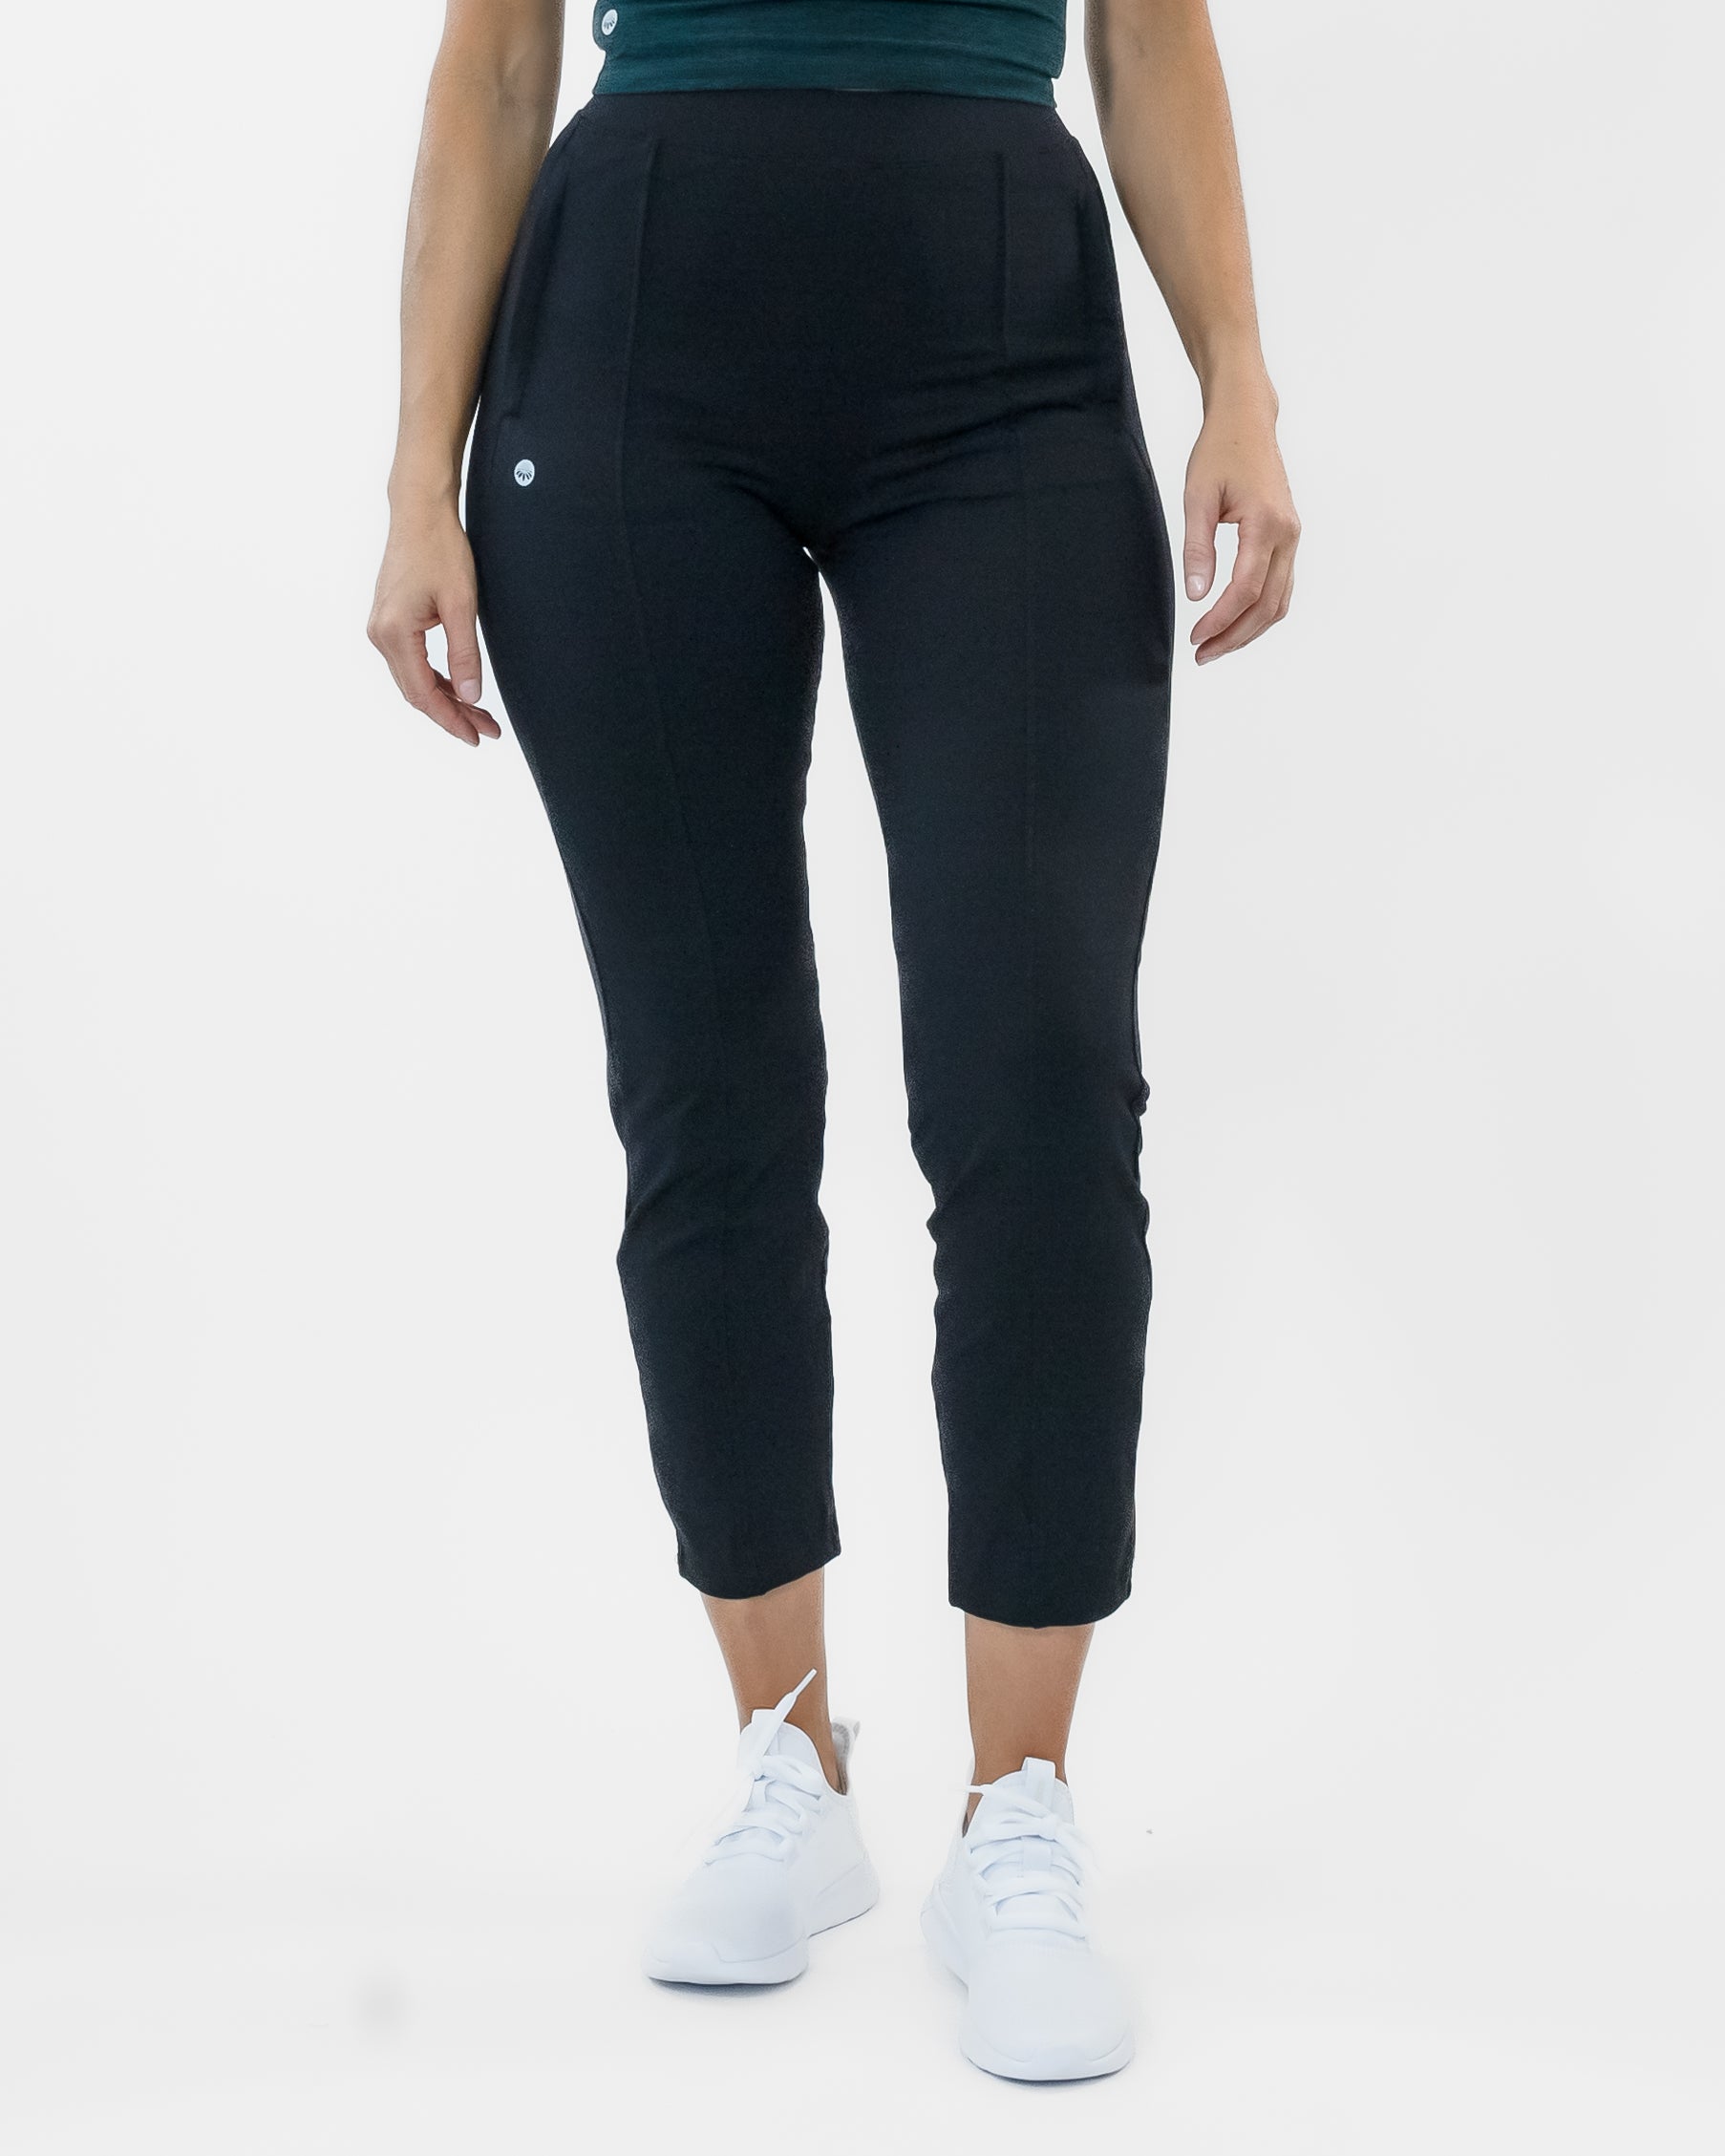 9-to-5 Pants - Black – Senita Athletics